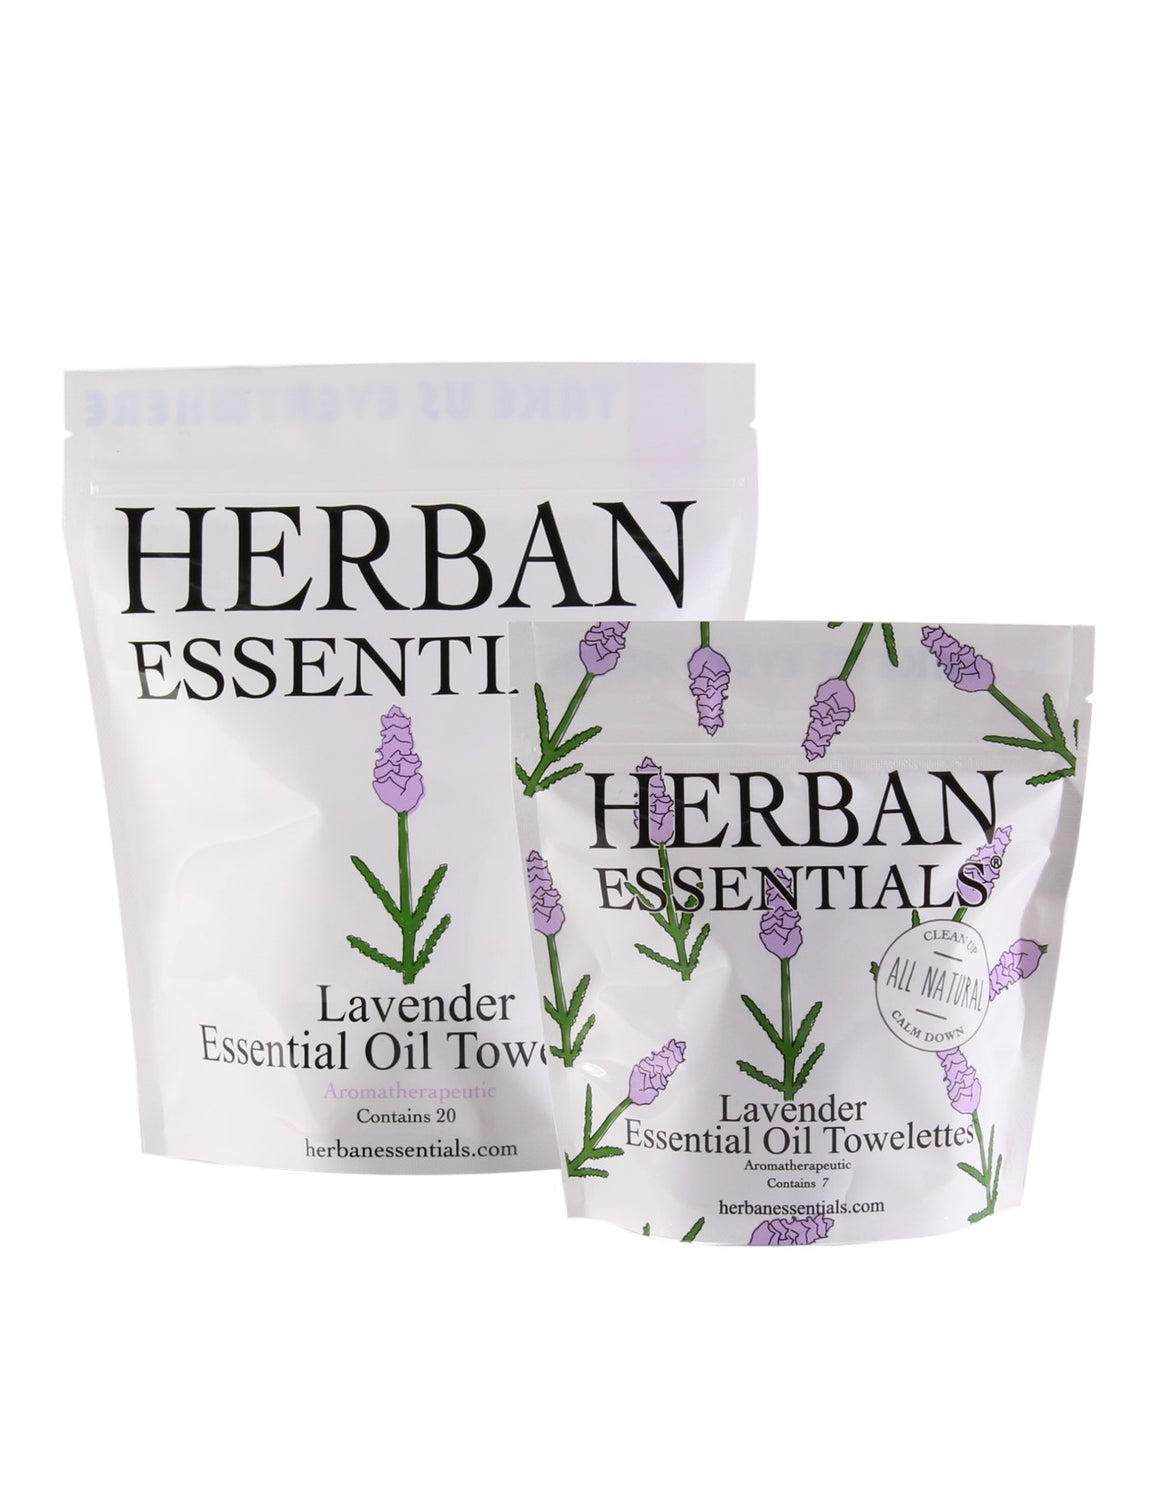 Herban Essentials - Lavender Essential Oil Towelettes